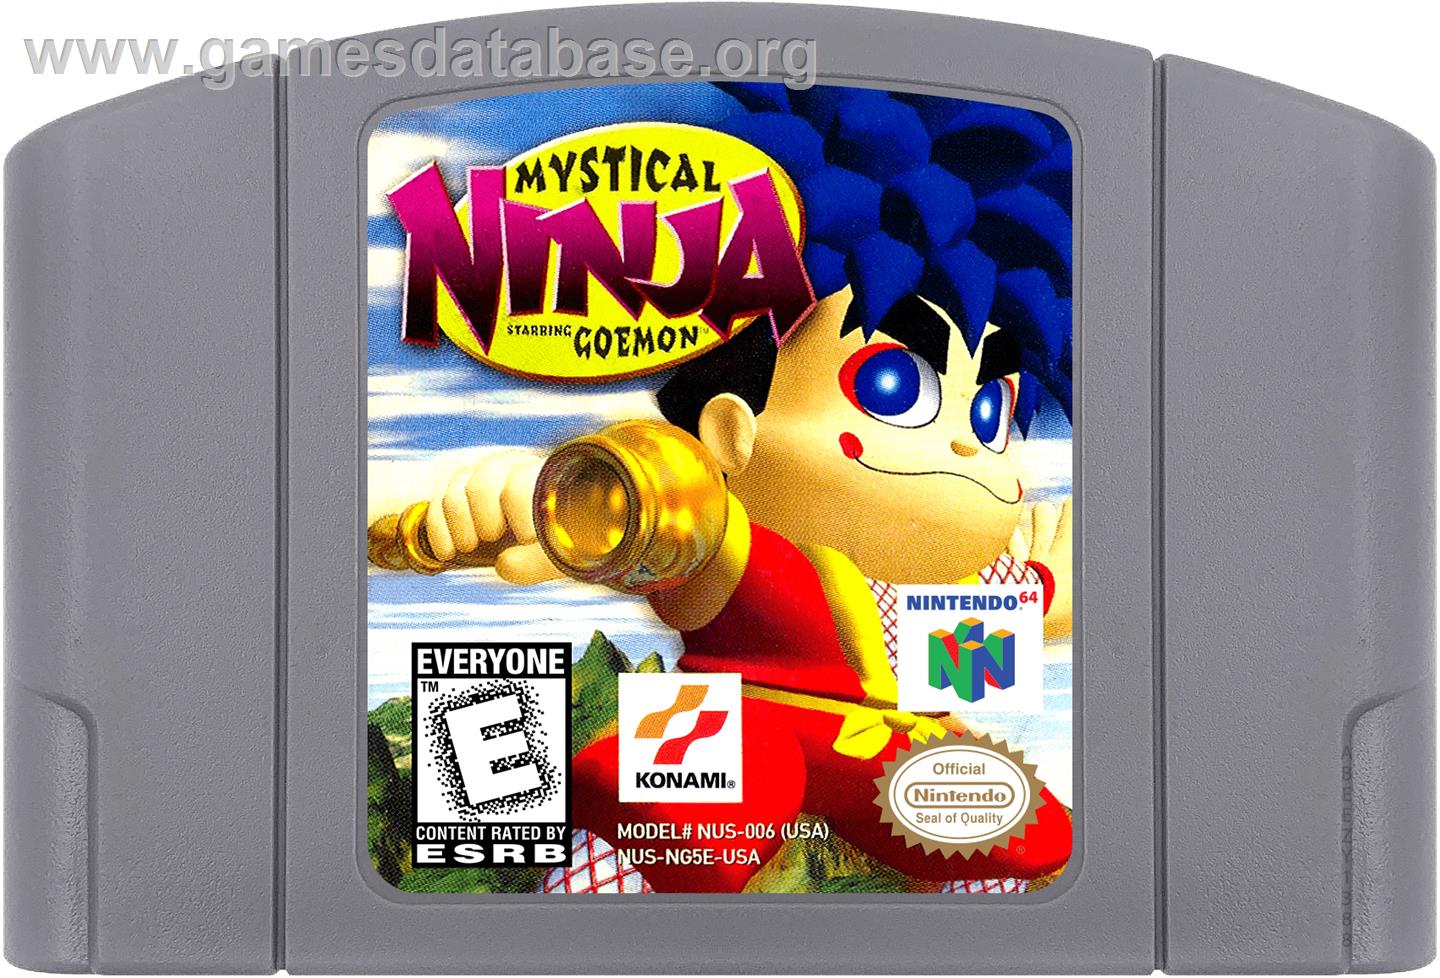 Mystical Ninja Starring Goemon - Nintendo N64 - Artwork - Cartridge